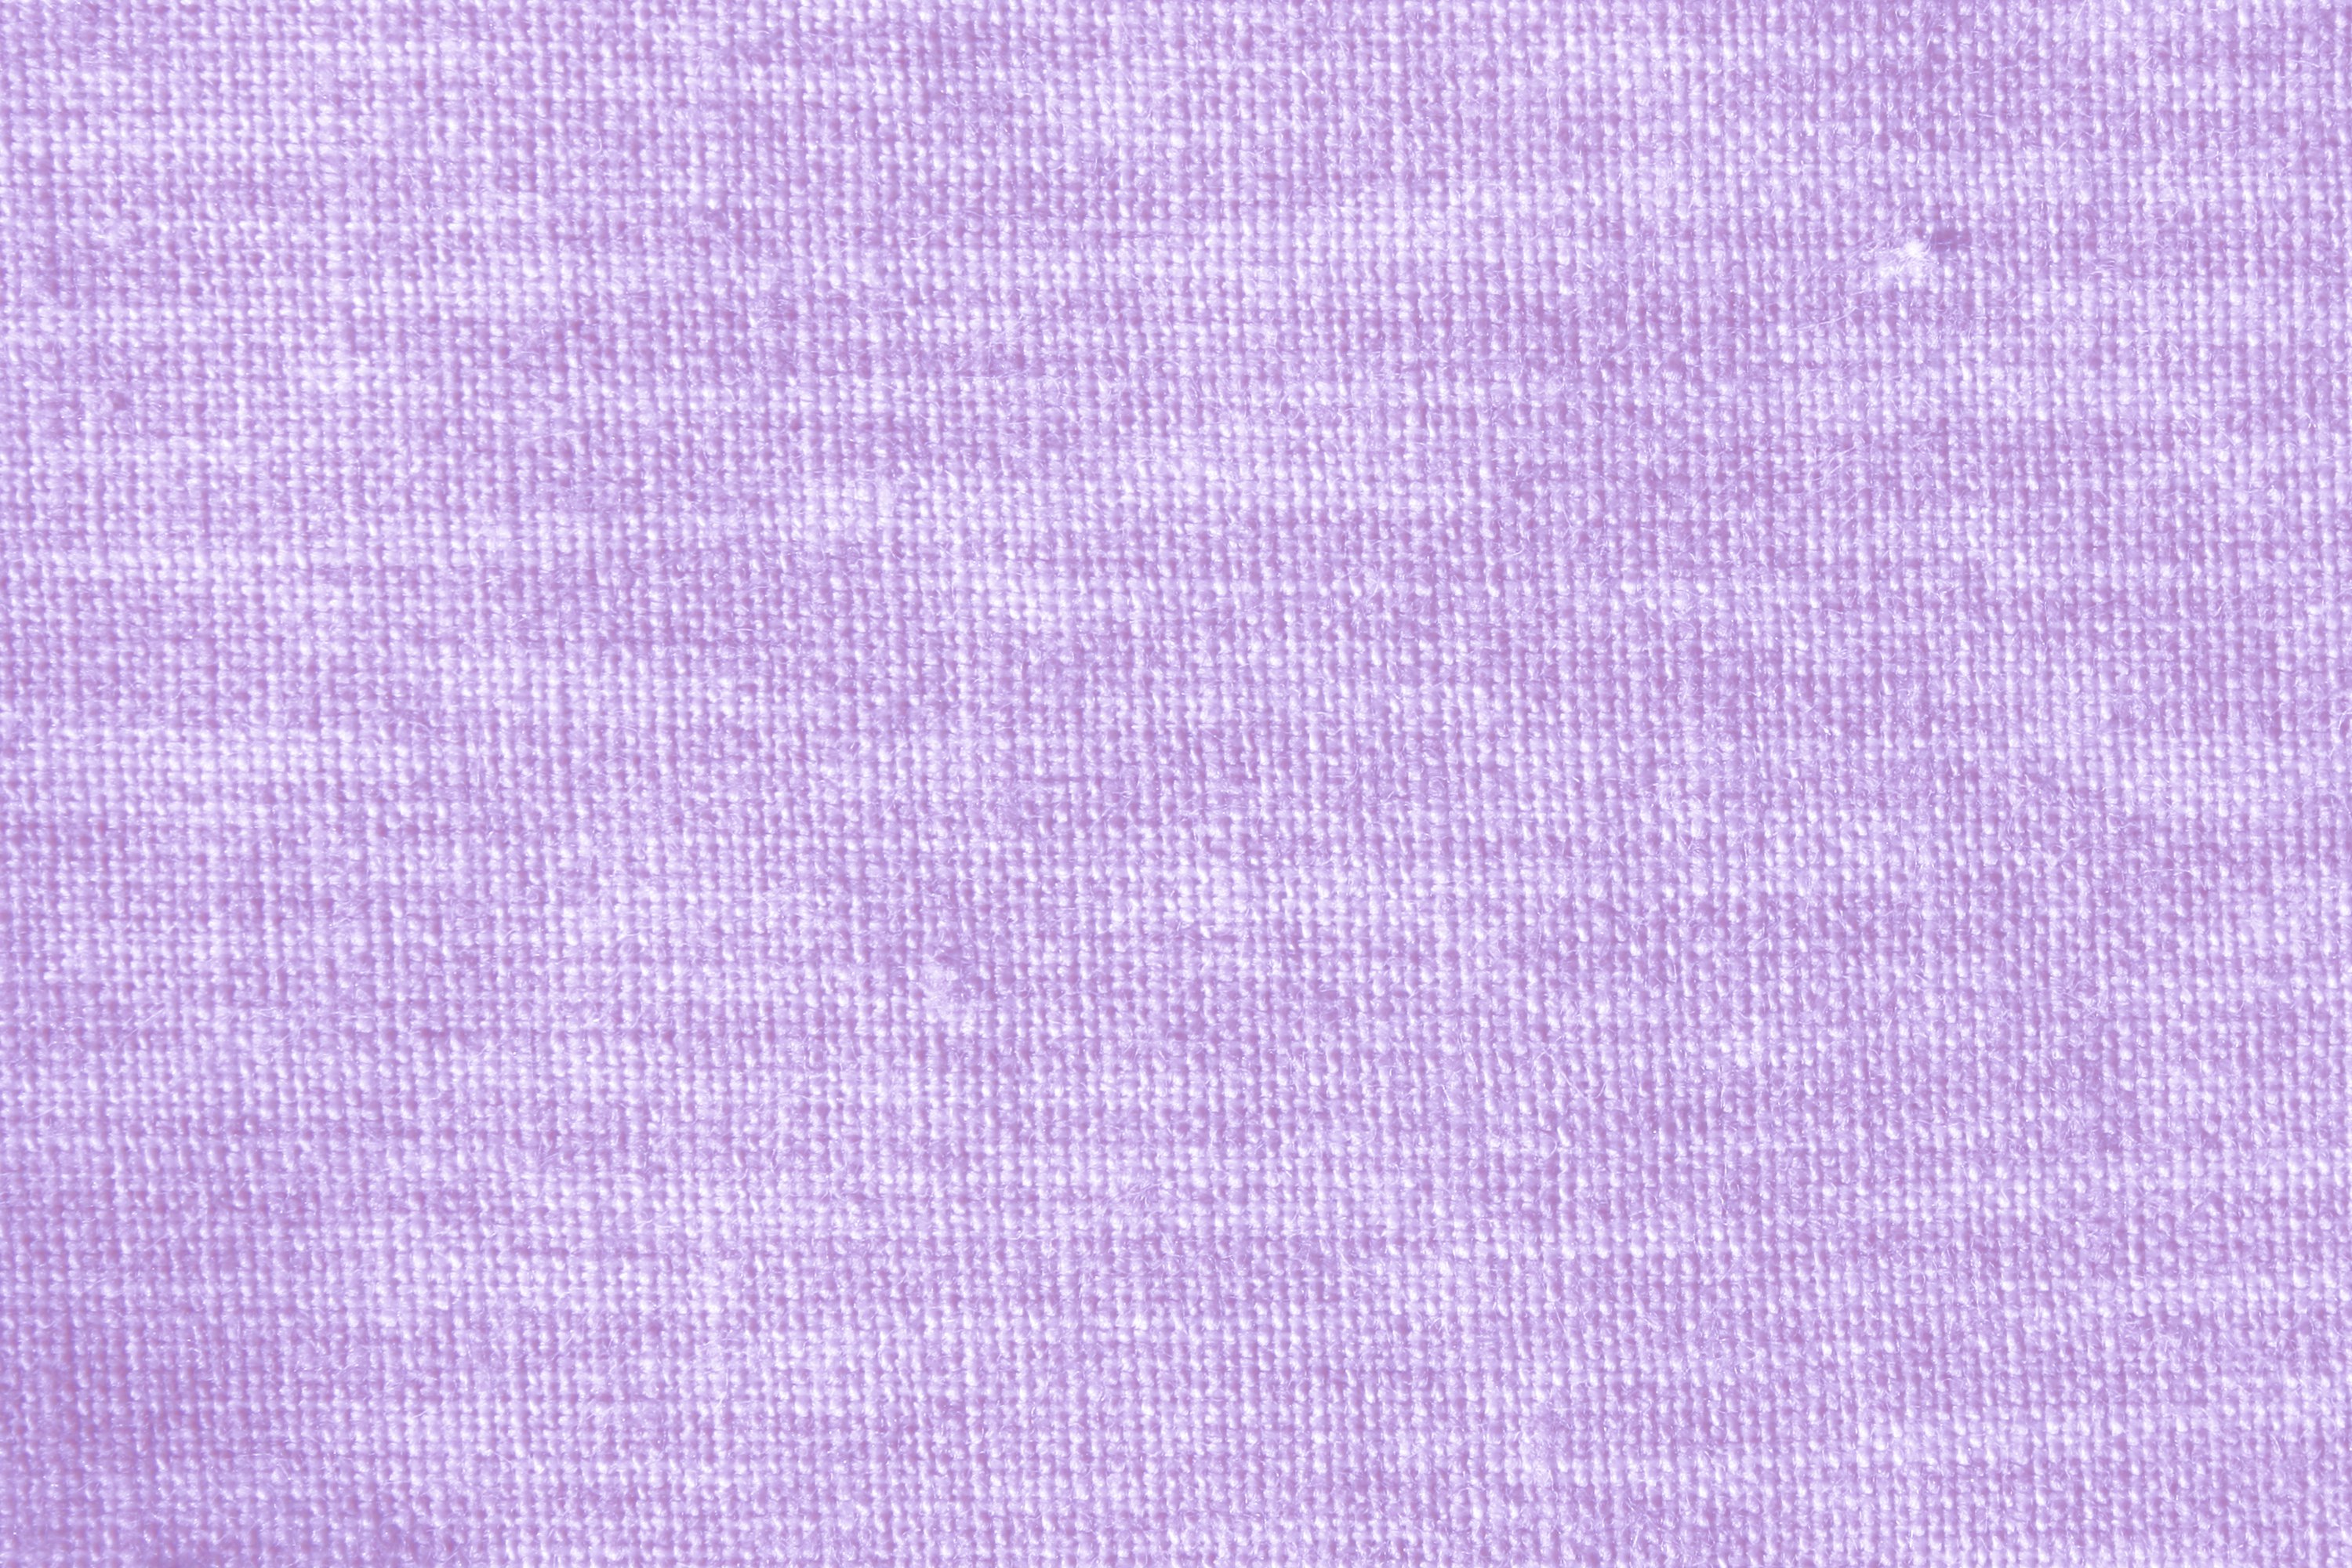 Lavender or Light Purple Woven Fabric Close Up Texture Picture | Free  Photograph | Photos Public Domain